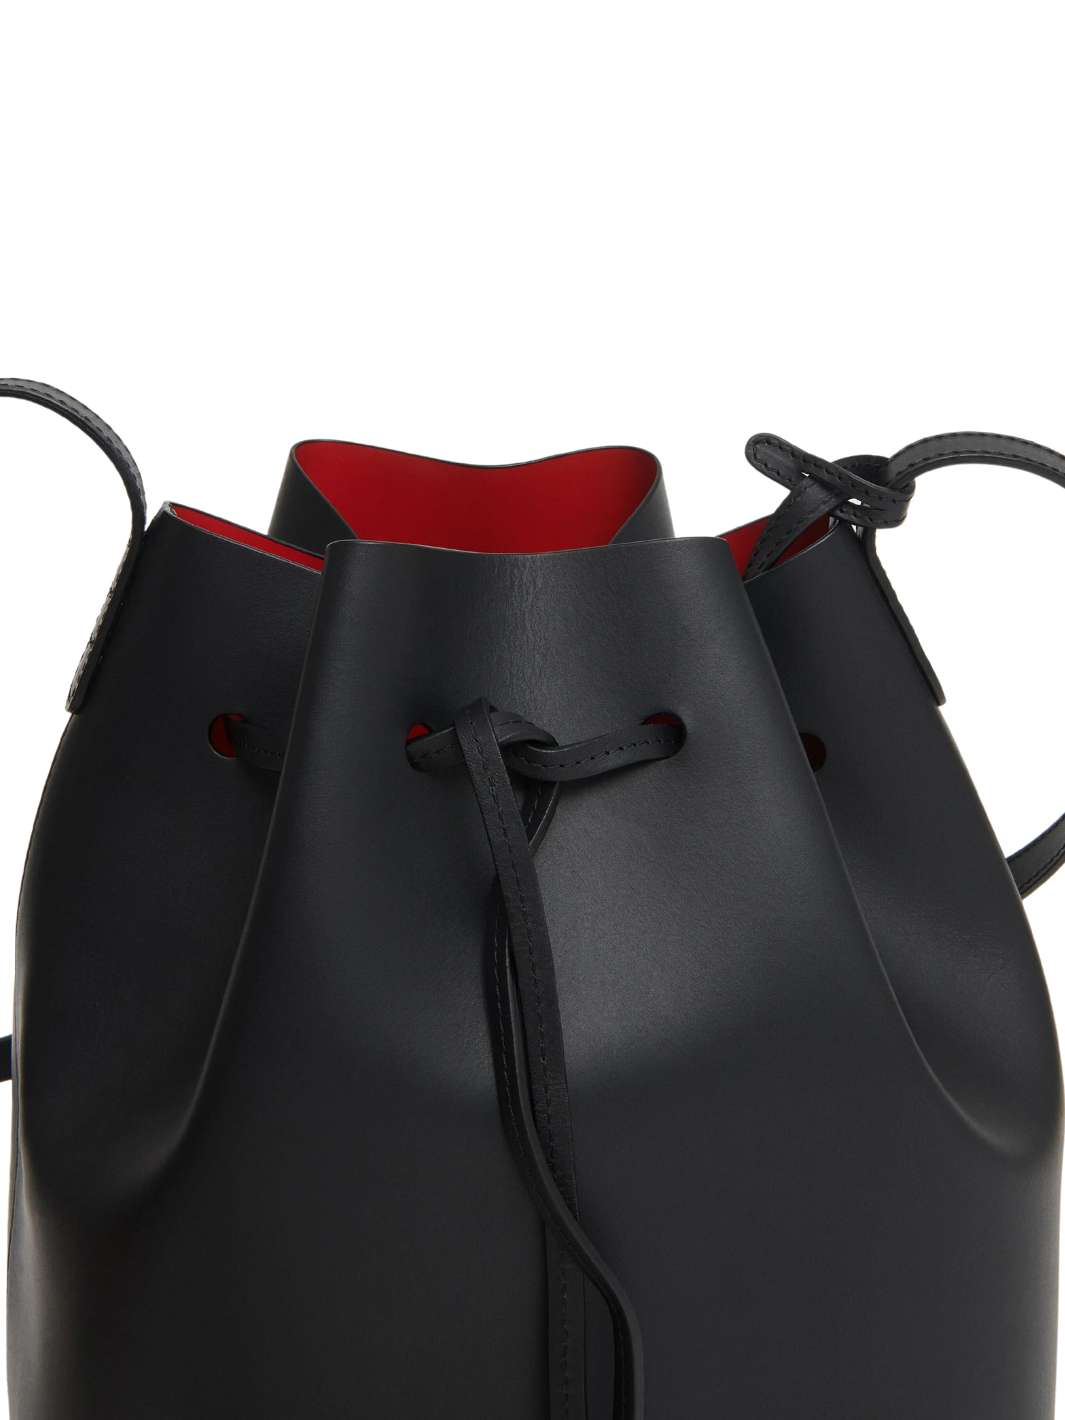 Mansur Gavriel Bags Black Veske | Bucket Bag Black/Flamma